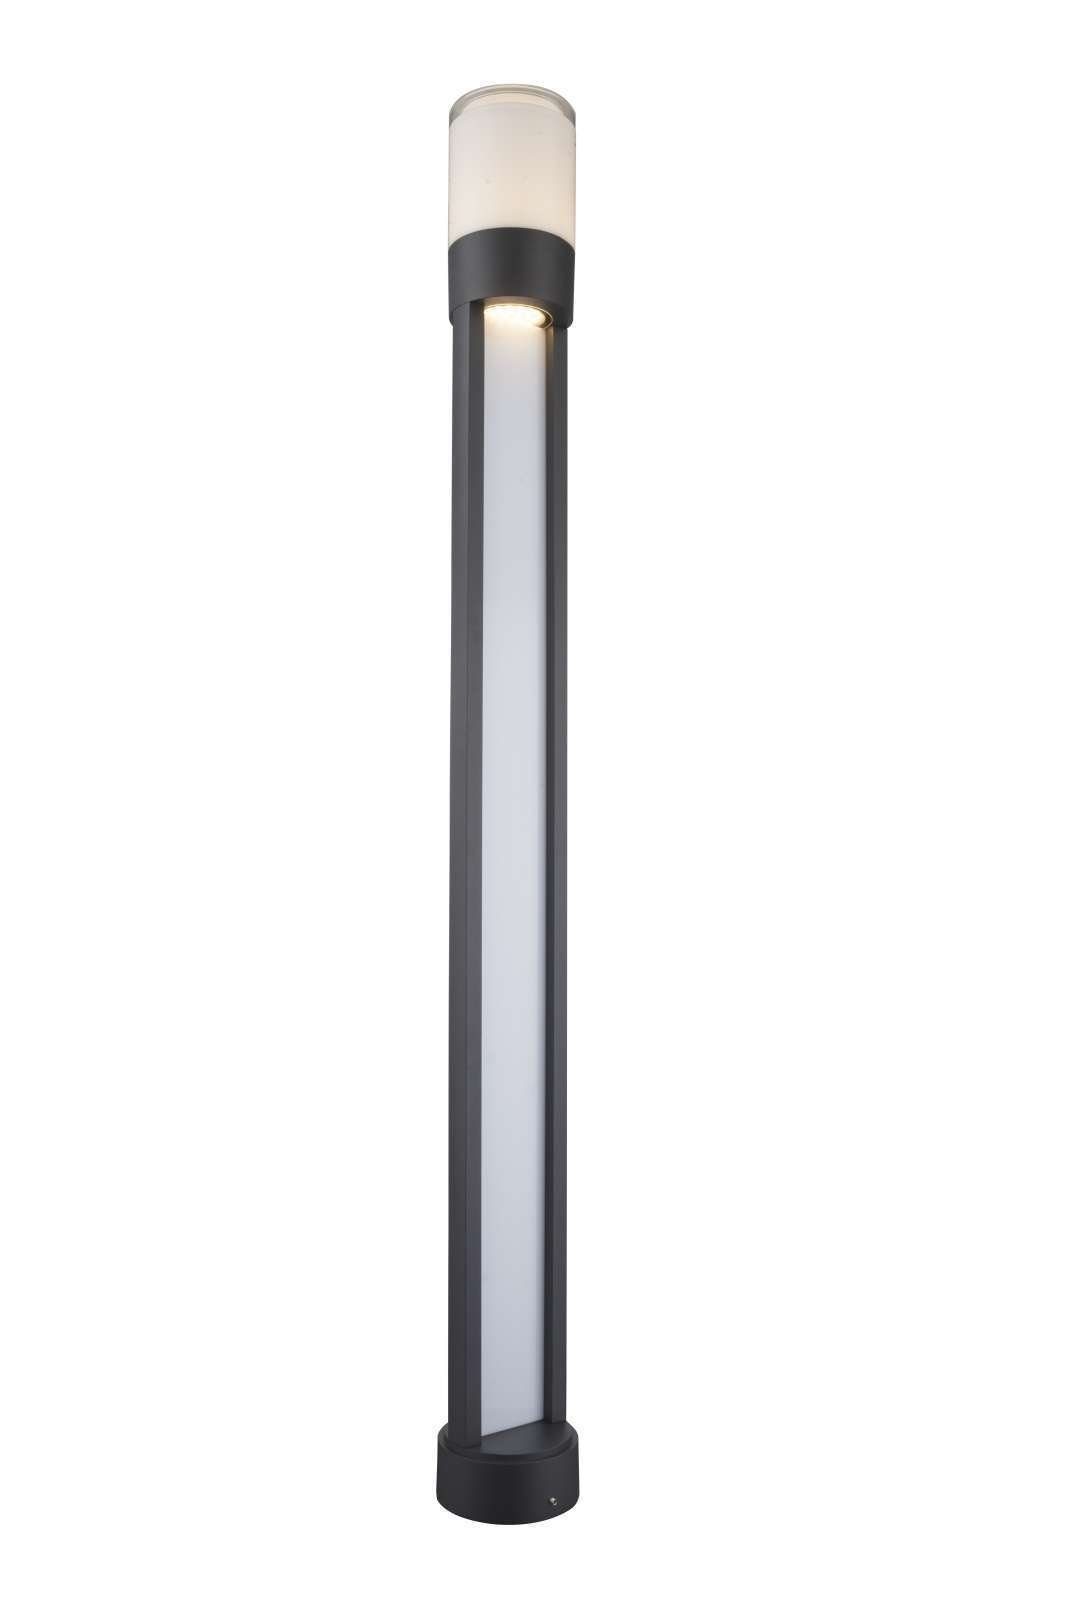 LED rund Aluminium-Druckguss Außenleuchte Globo 34013 lang Gartenleuchte GLOBO Nexa